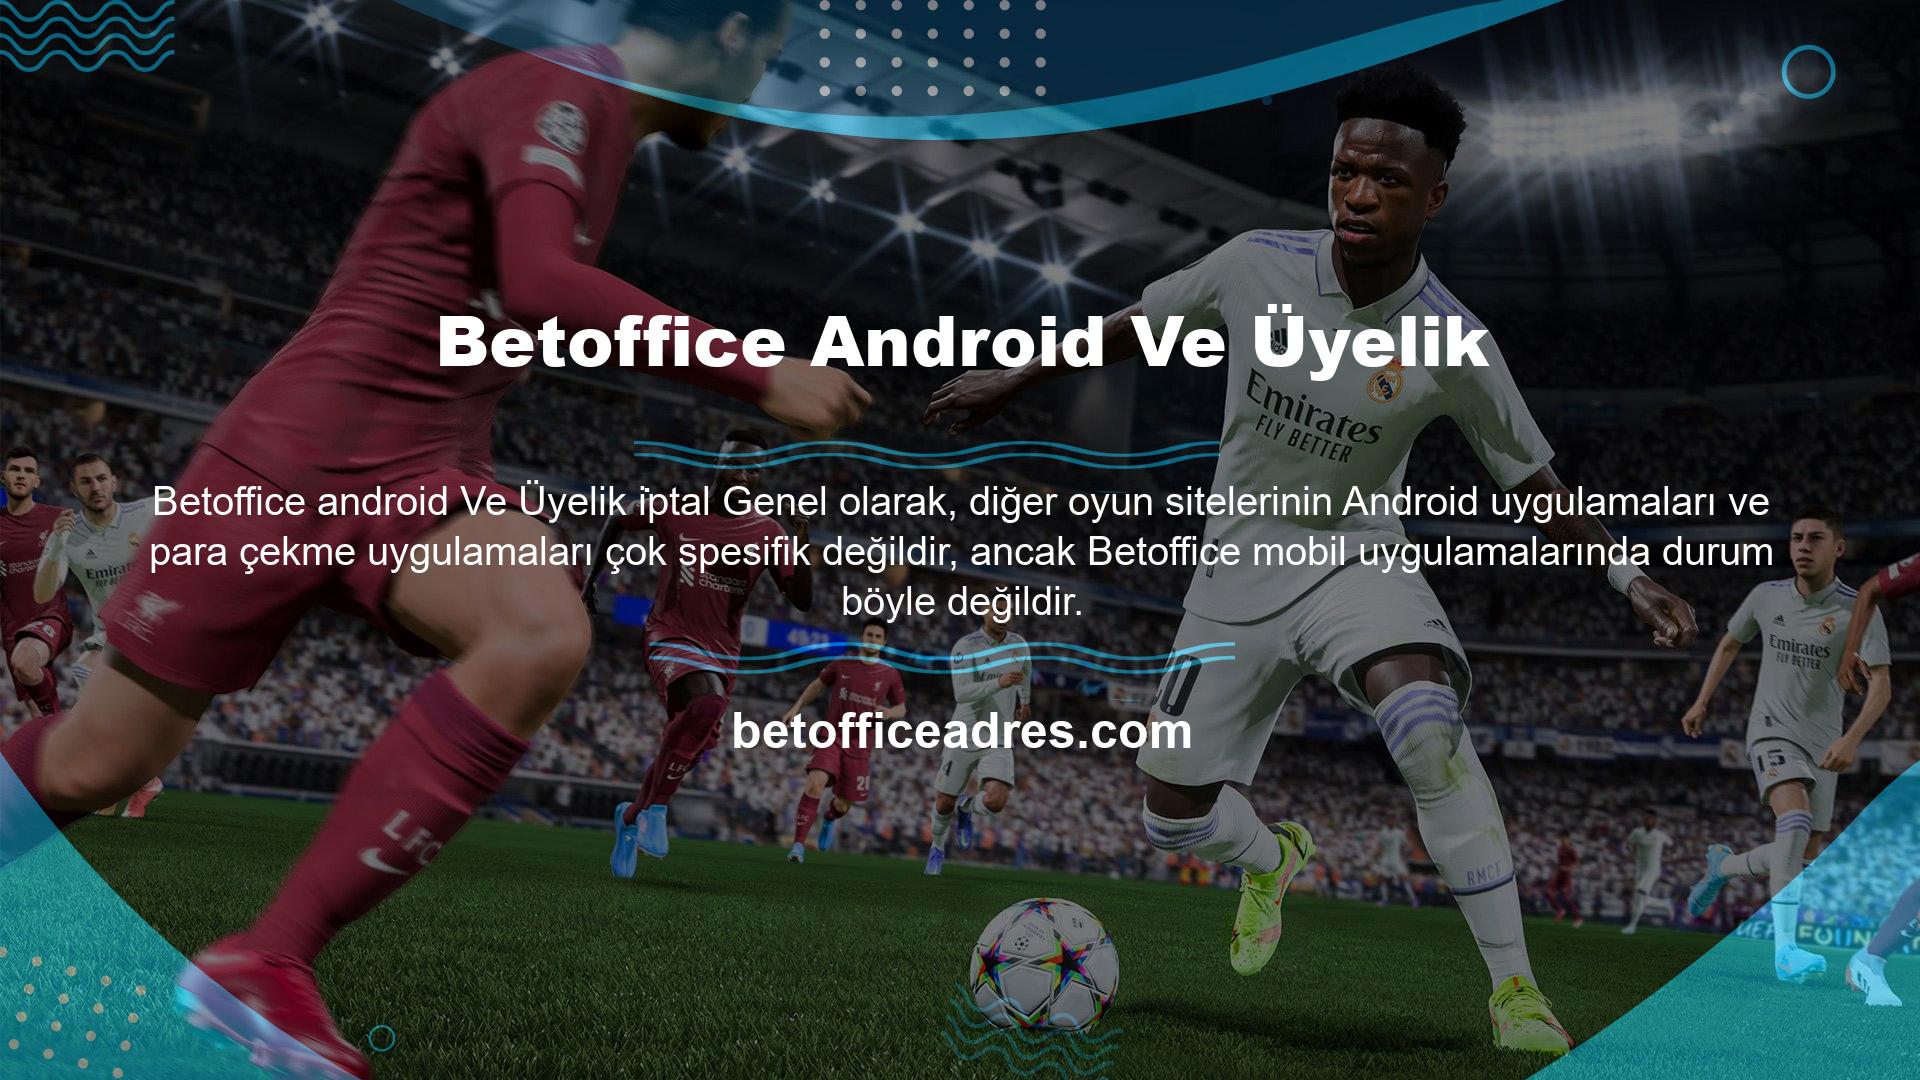 Betoffice mobil uygulamaları Android ve iOS ile tam uyumludur